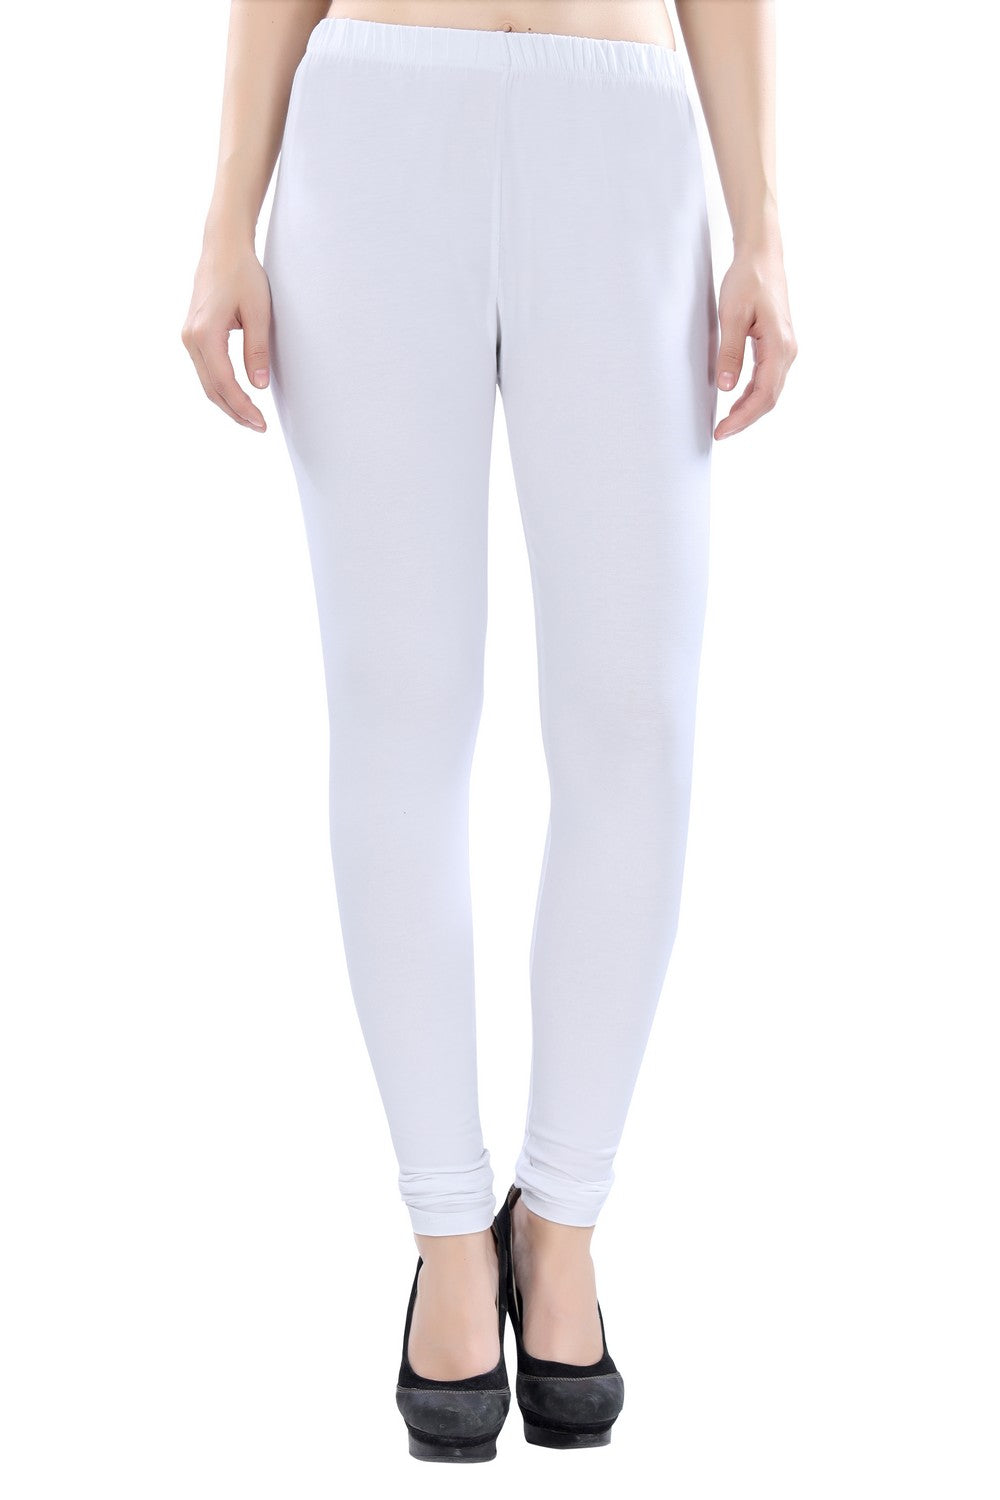 TRASA Women's Cotton 4 Way Stretchable Slim Fit Churidar Leggings - White